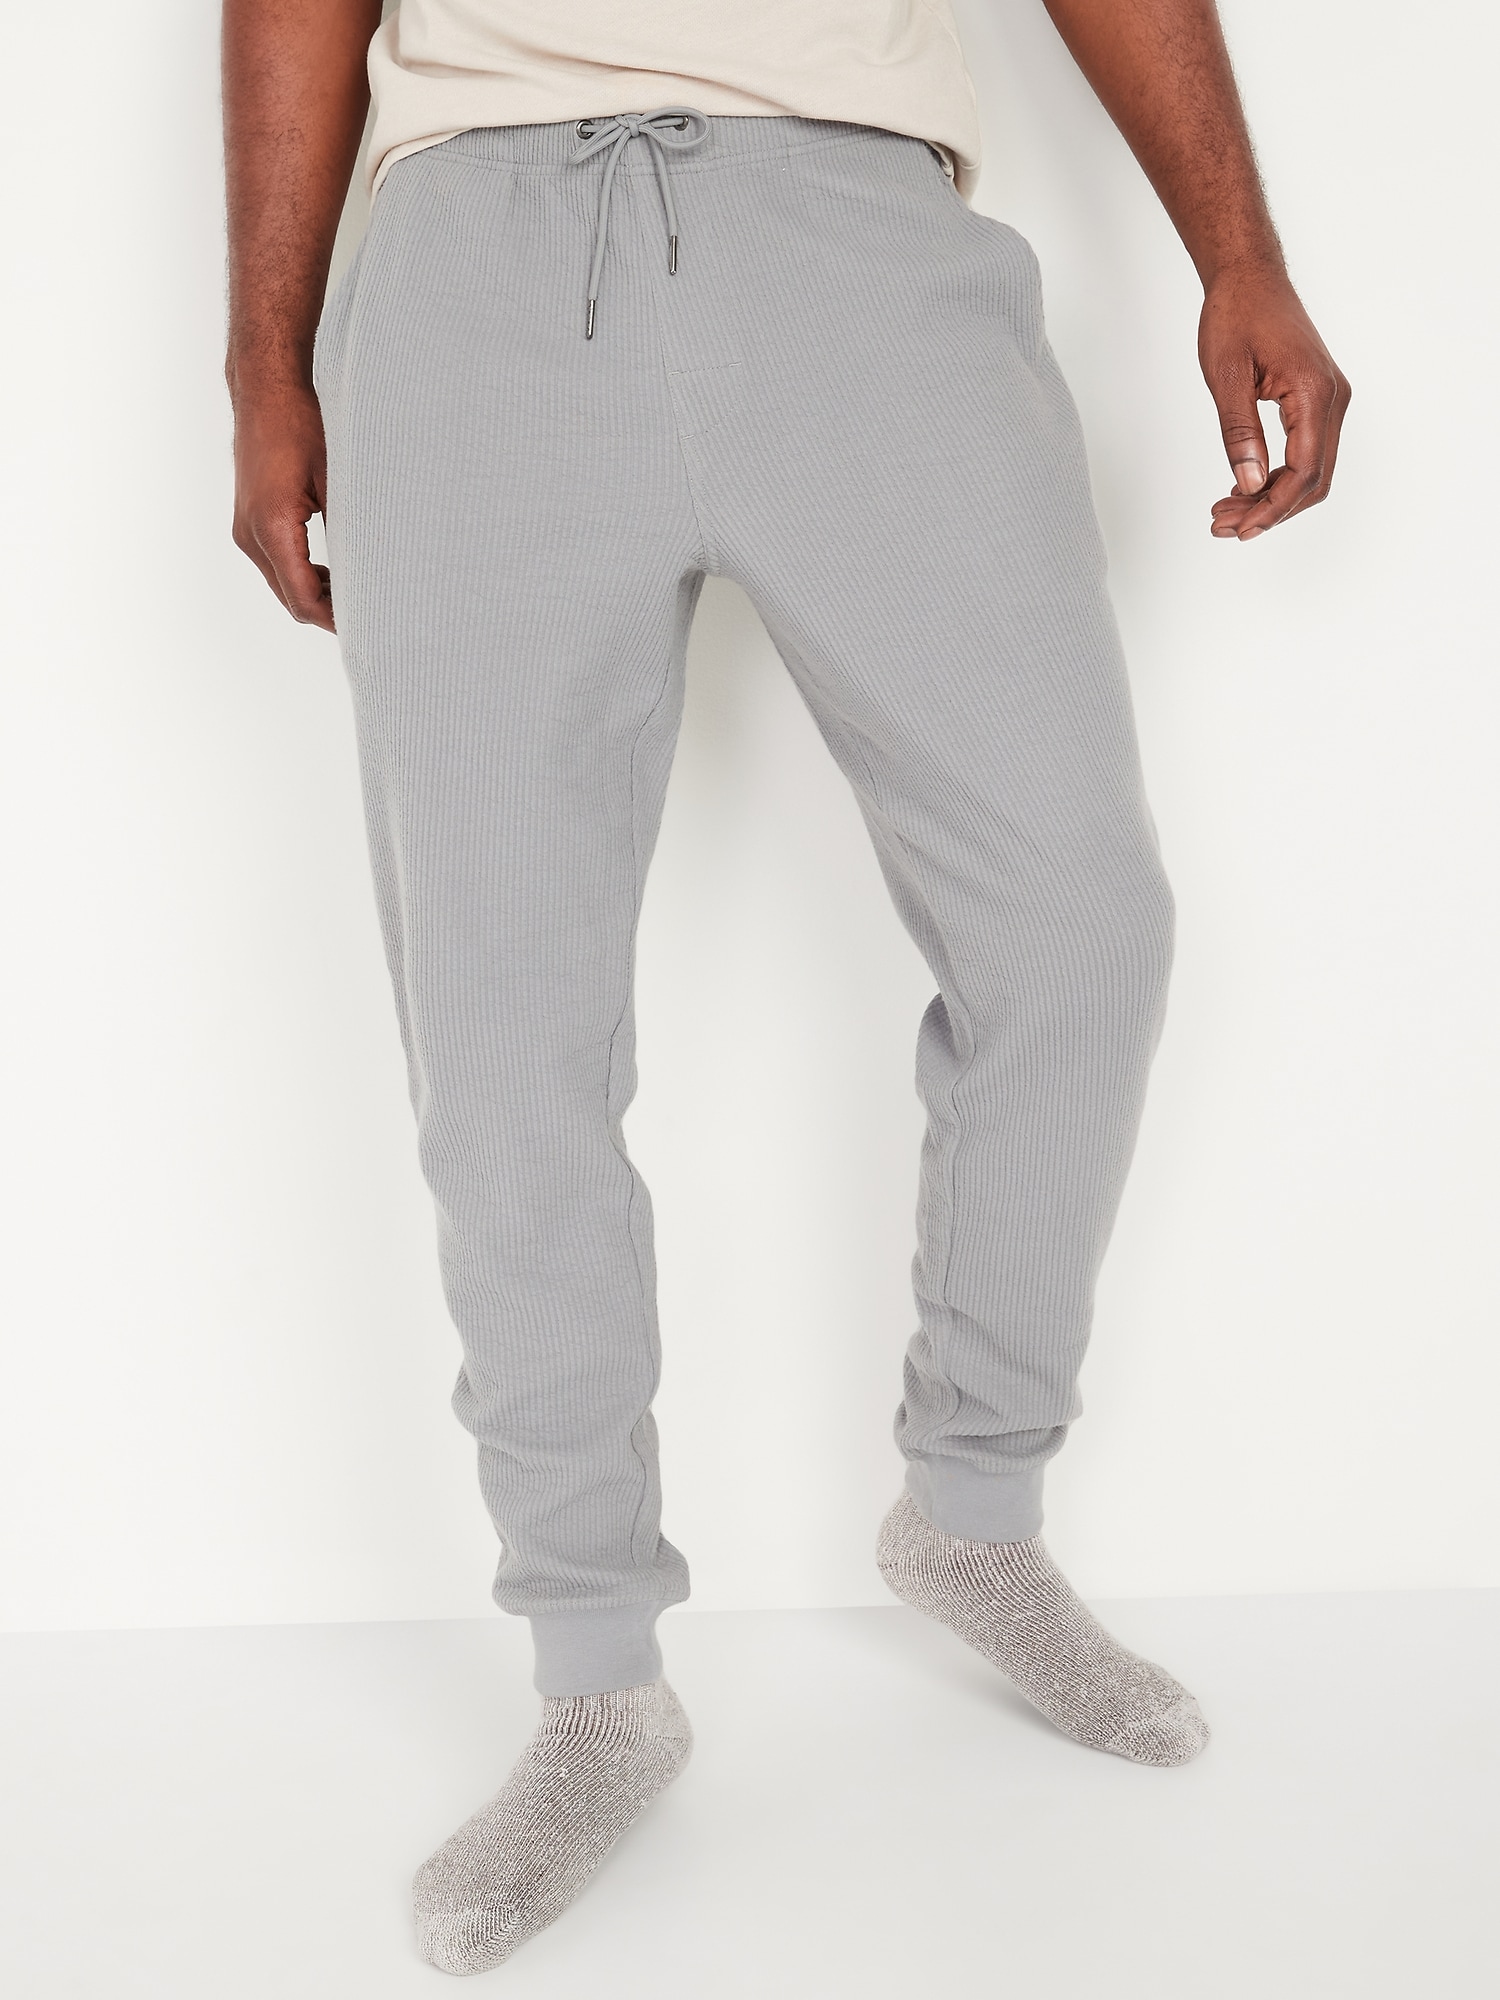 French-Rib Jogger Pajama Pants for Men | Old Navy